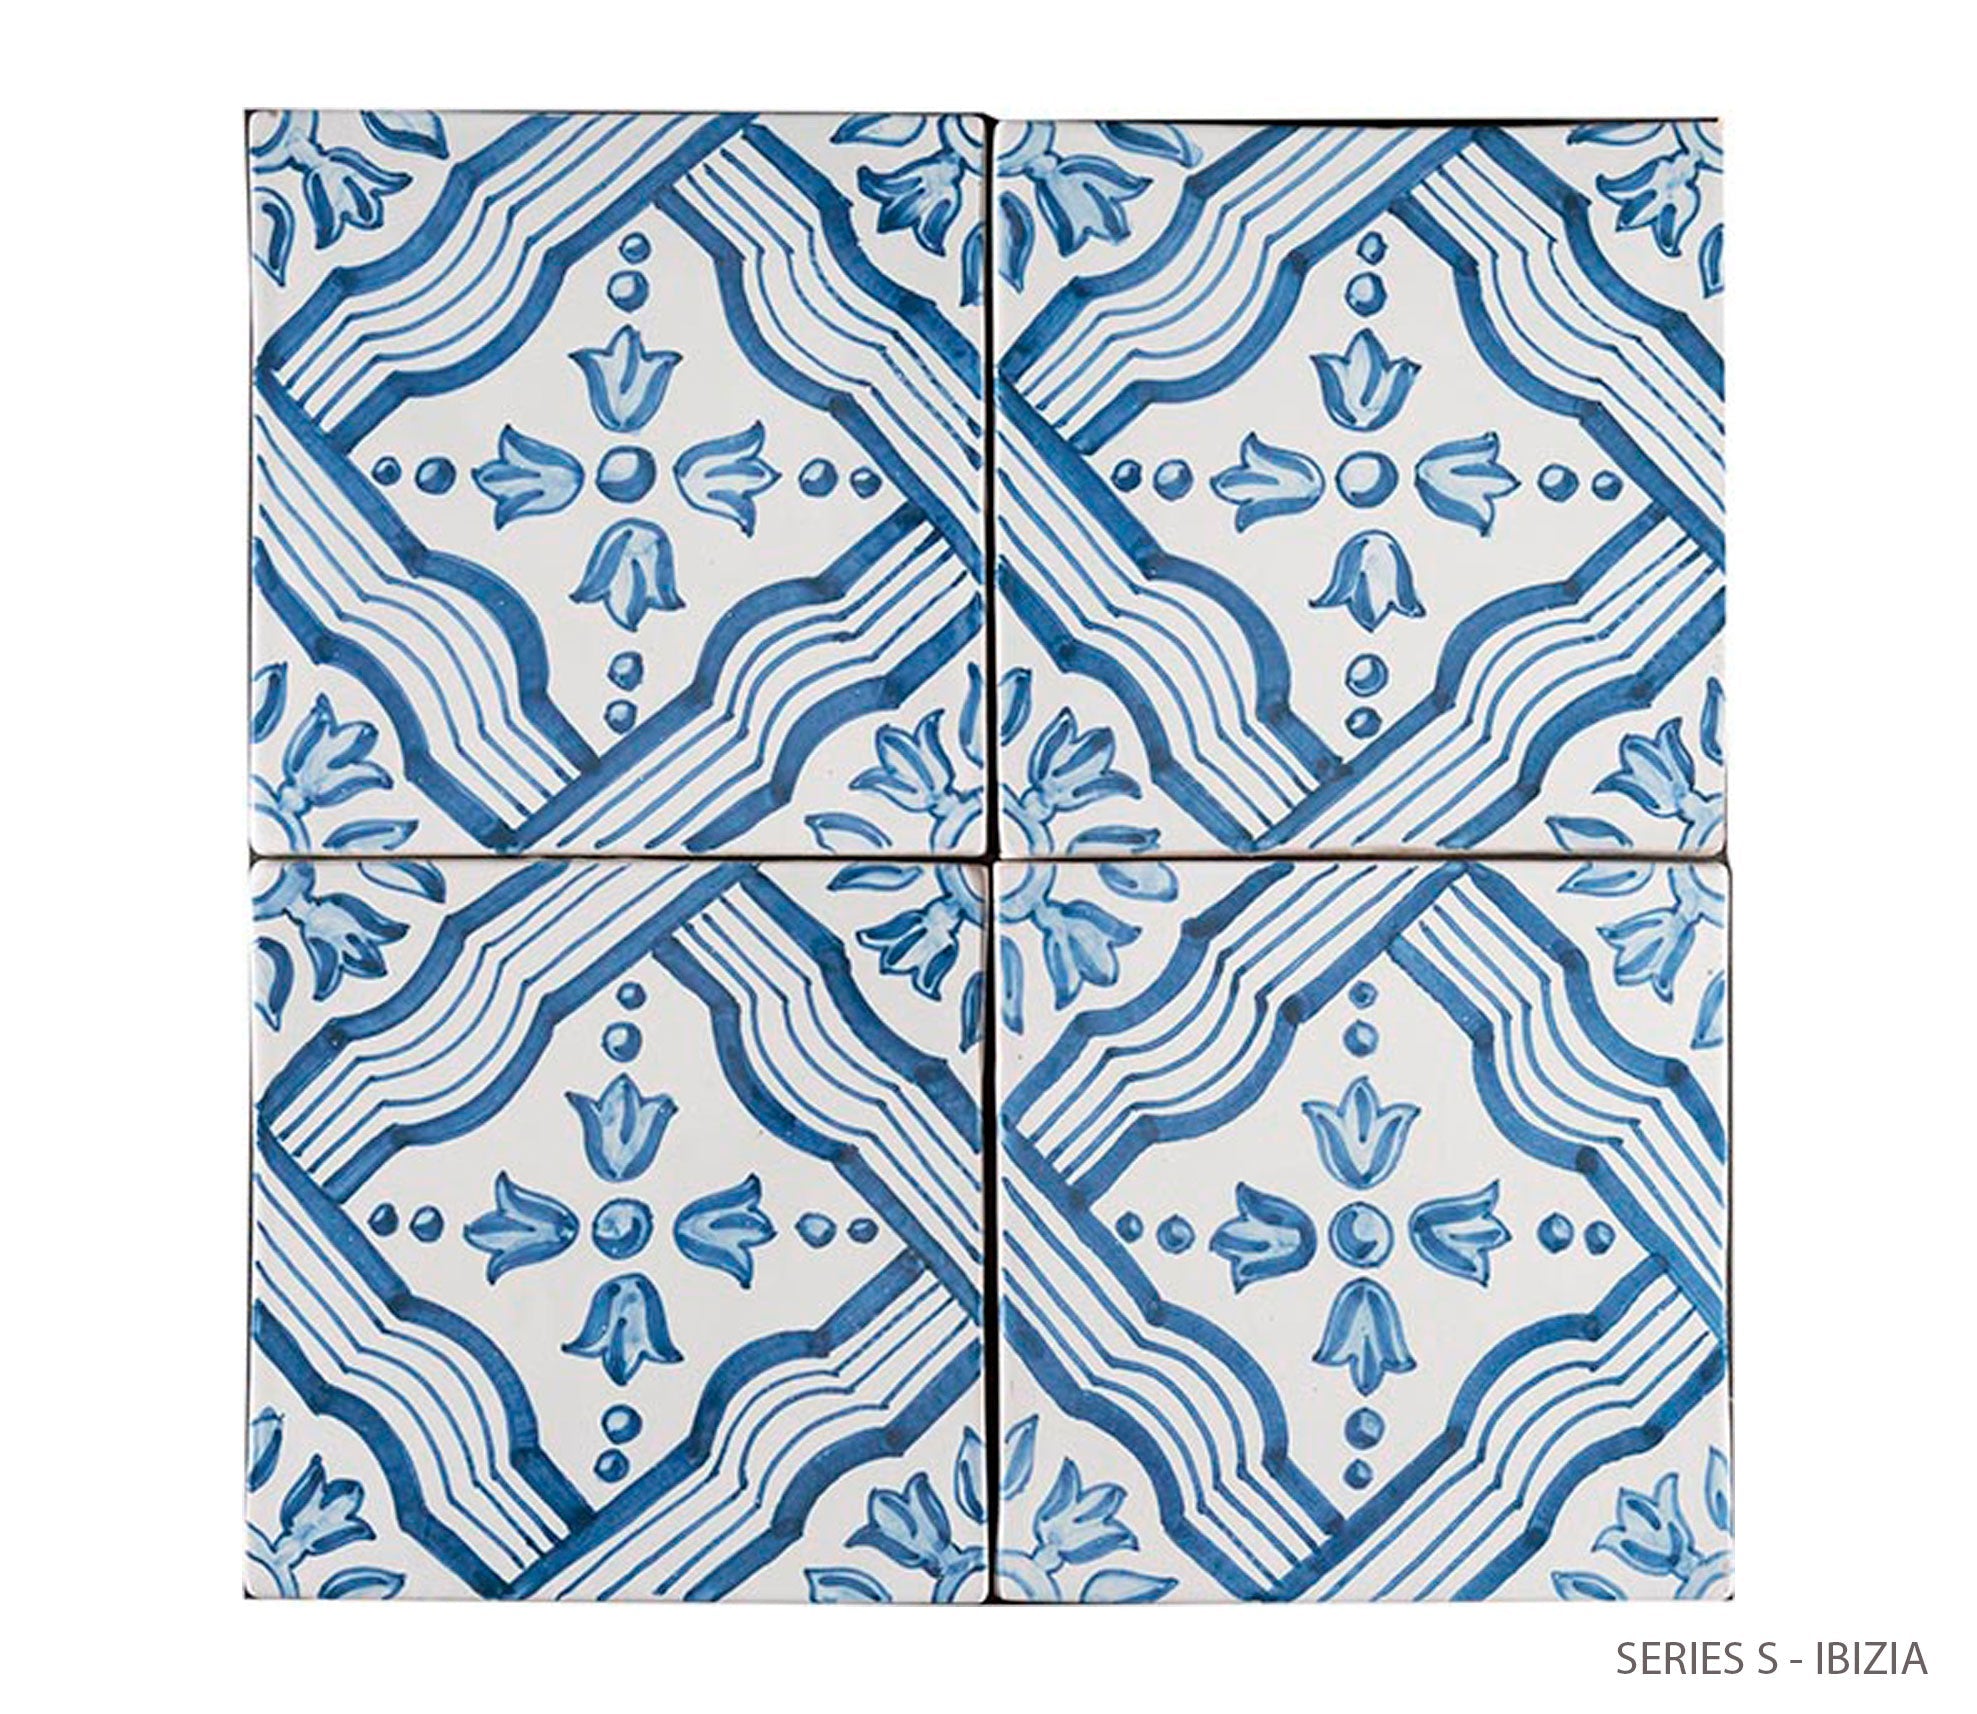 Series S Italian Handpainted Tiles Product Image 24